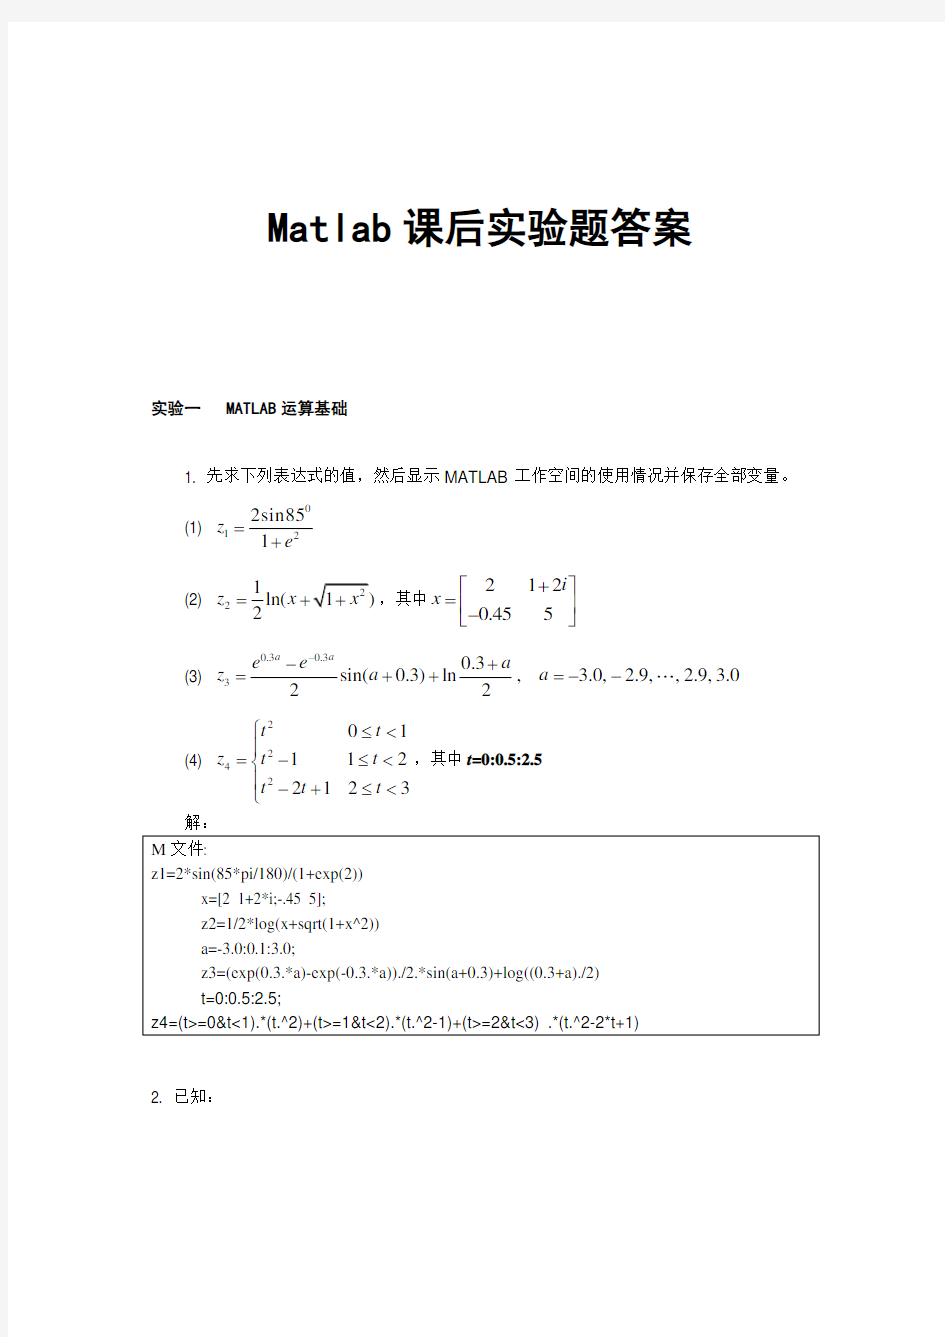 MATLAB程序设计与应用(第二版)课后实验答案